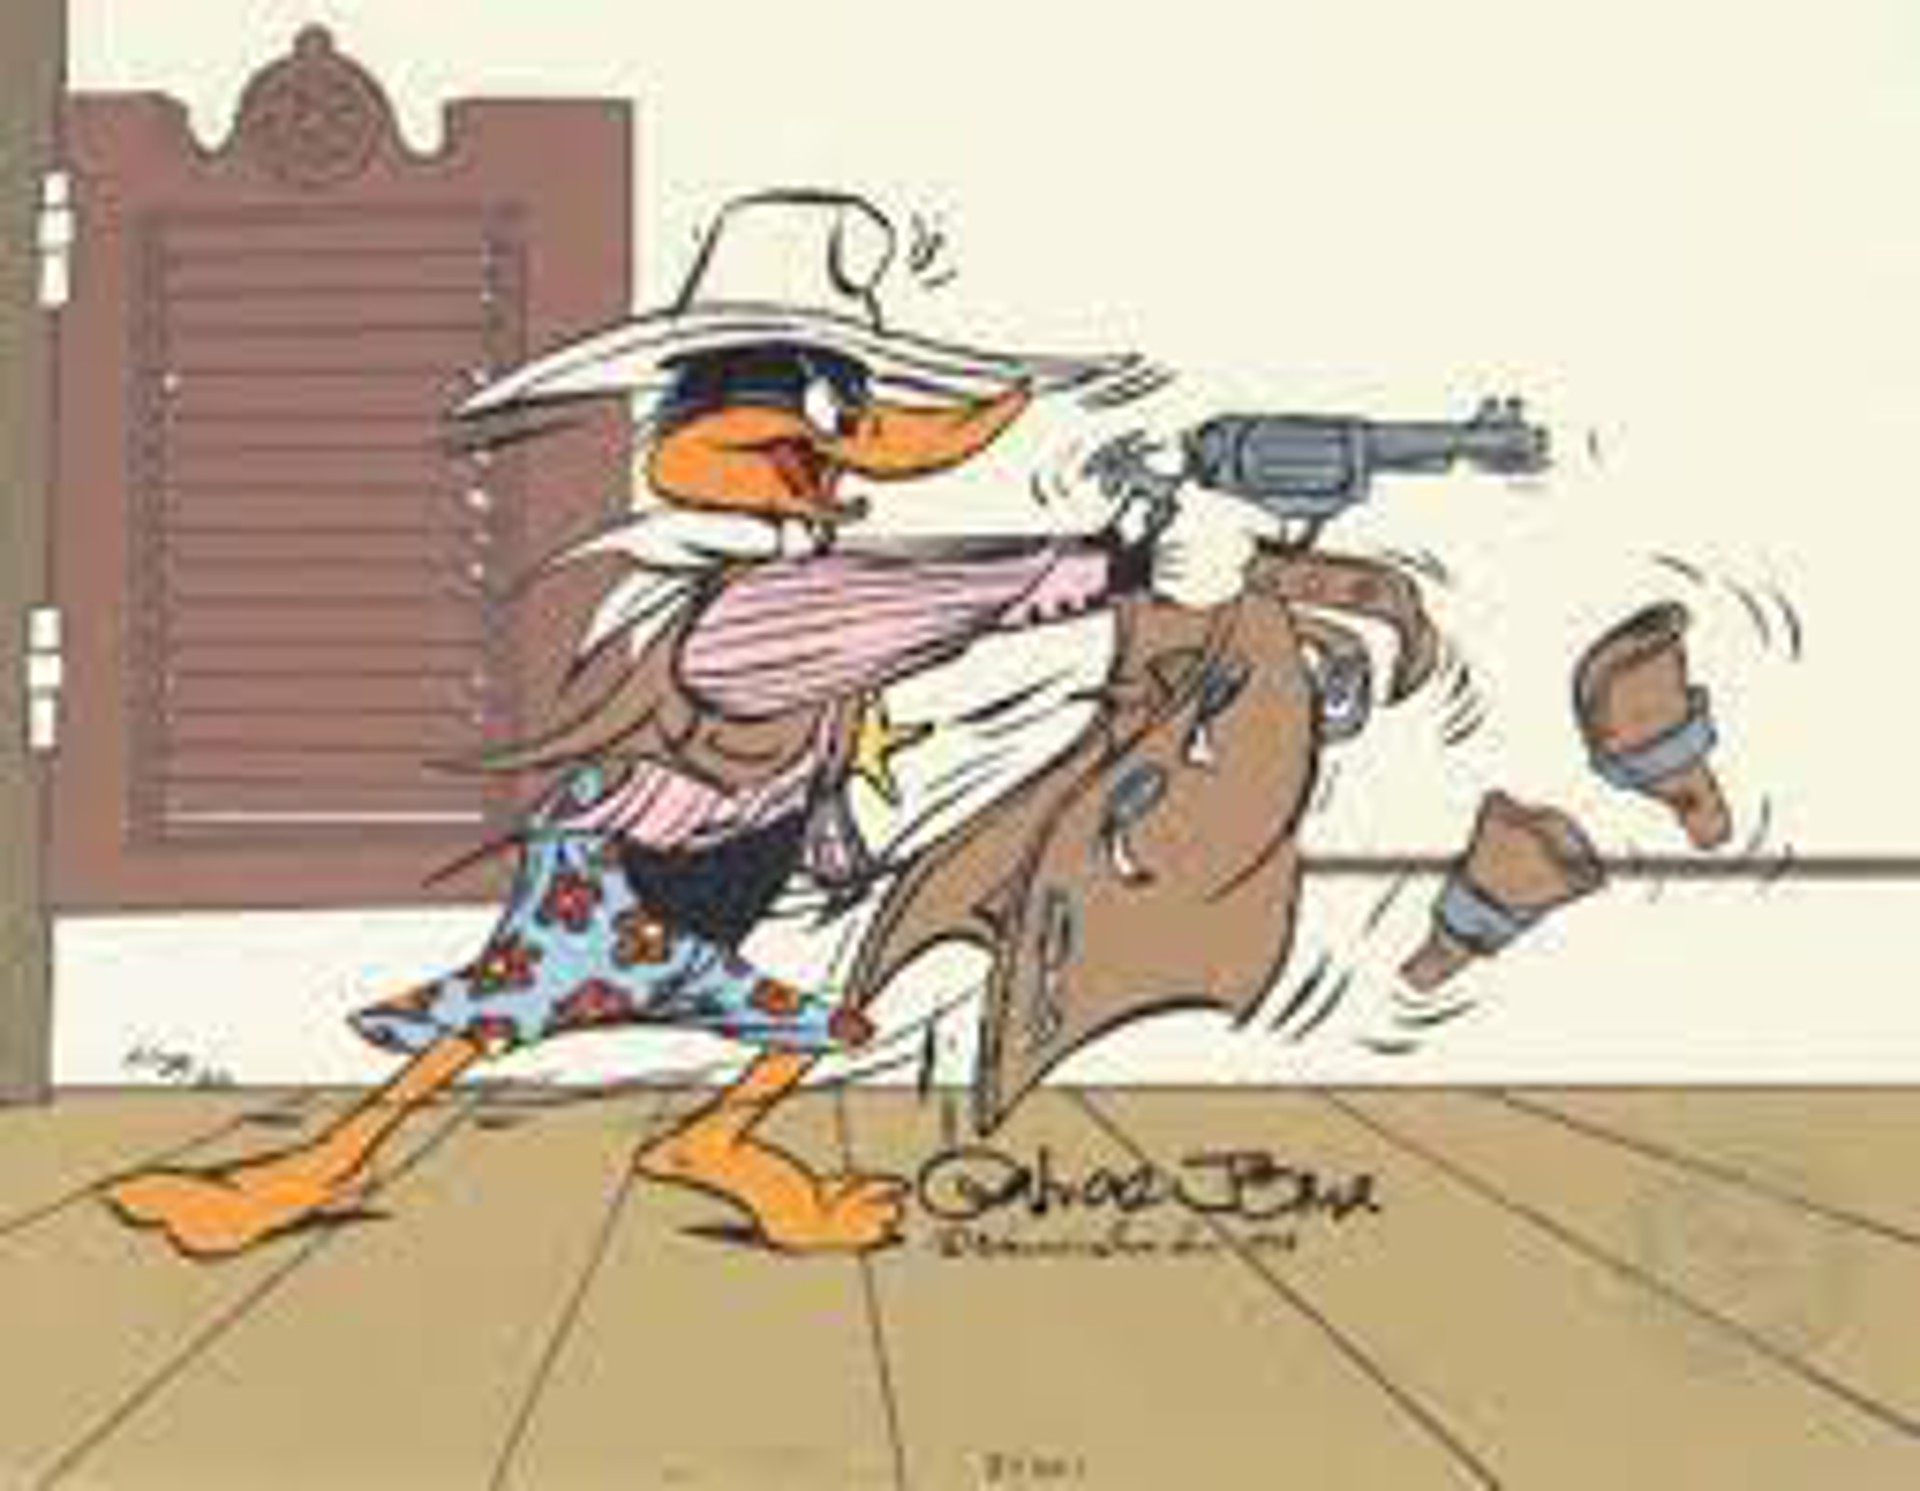 Drip A Long Daffy by Chuck Jones